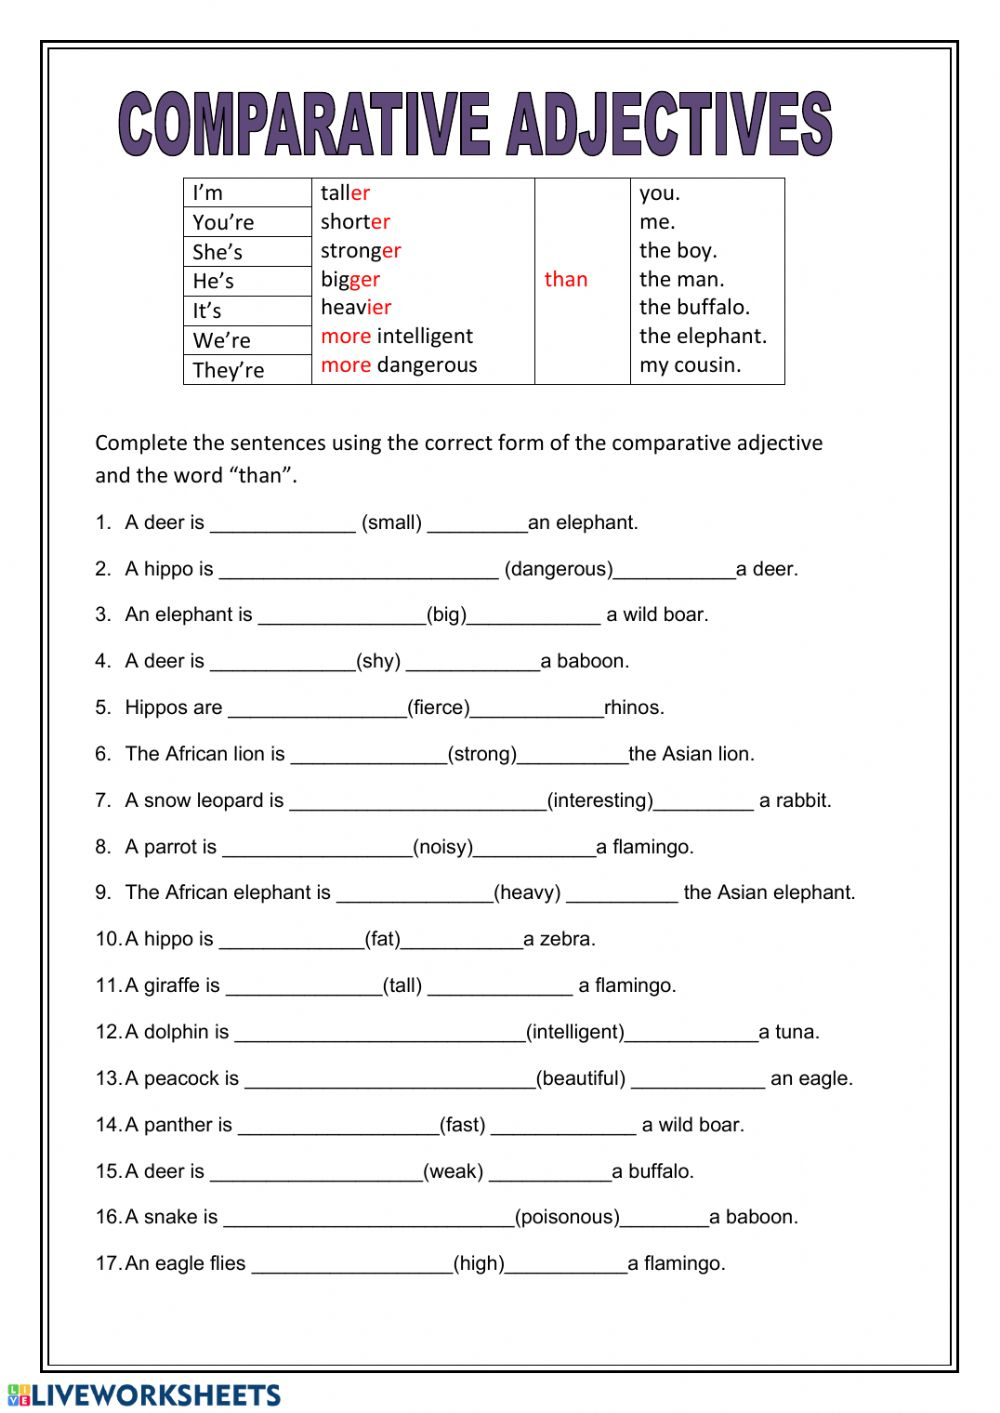 Grammar Comparative Adjectives Worksheet